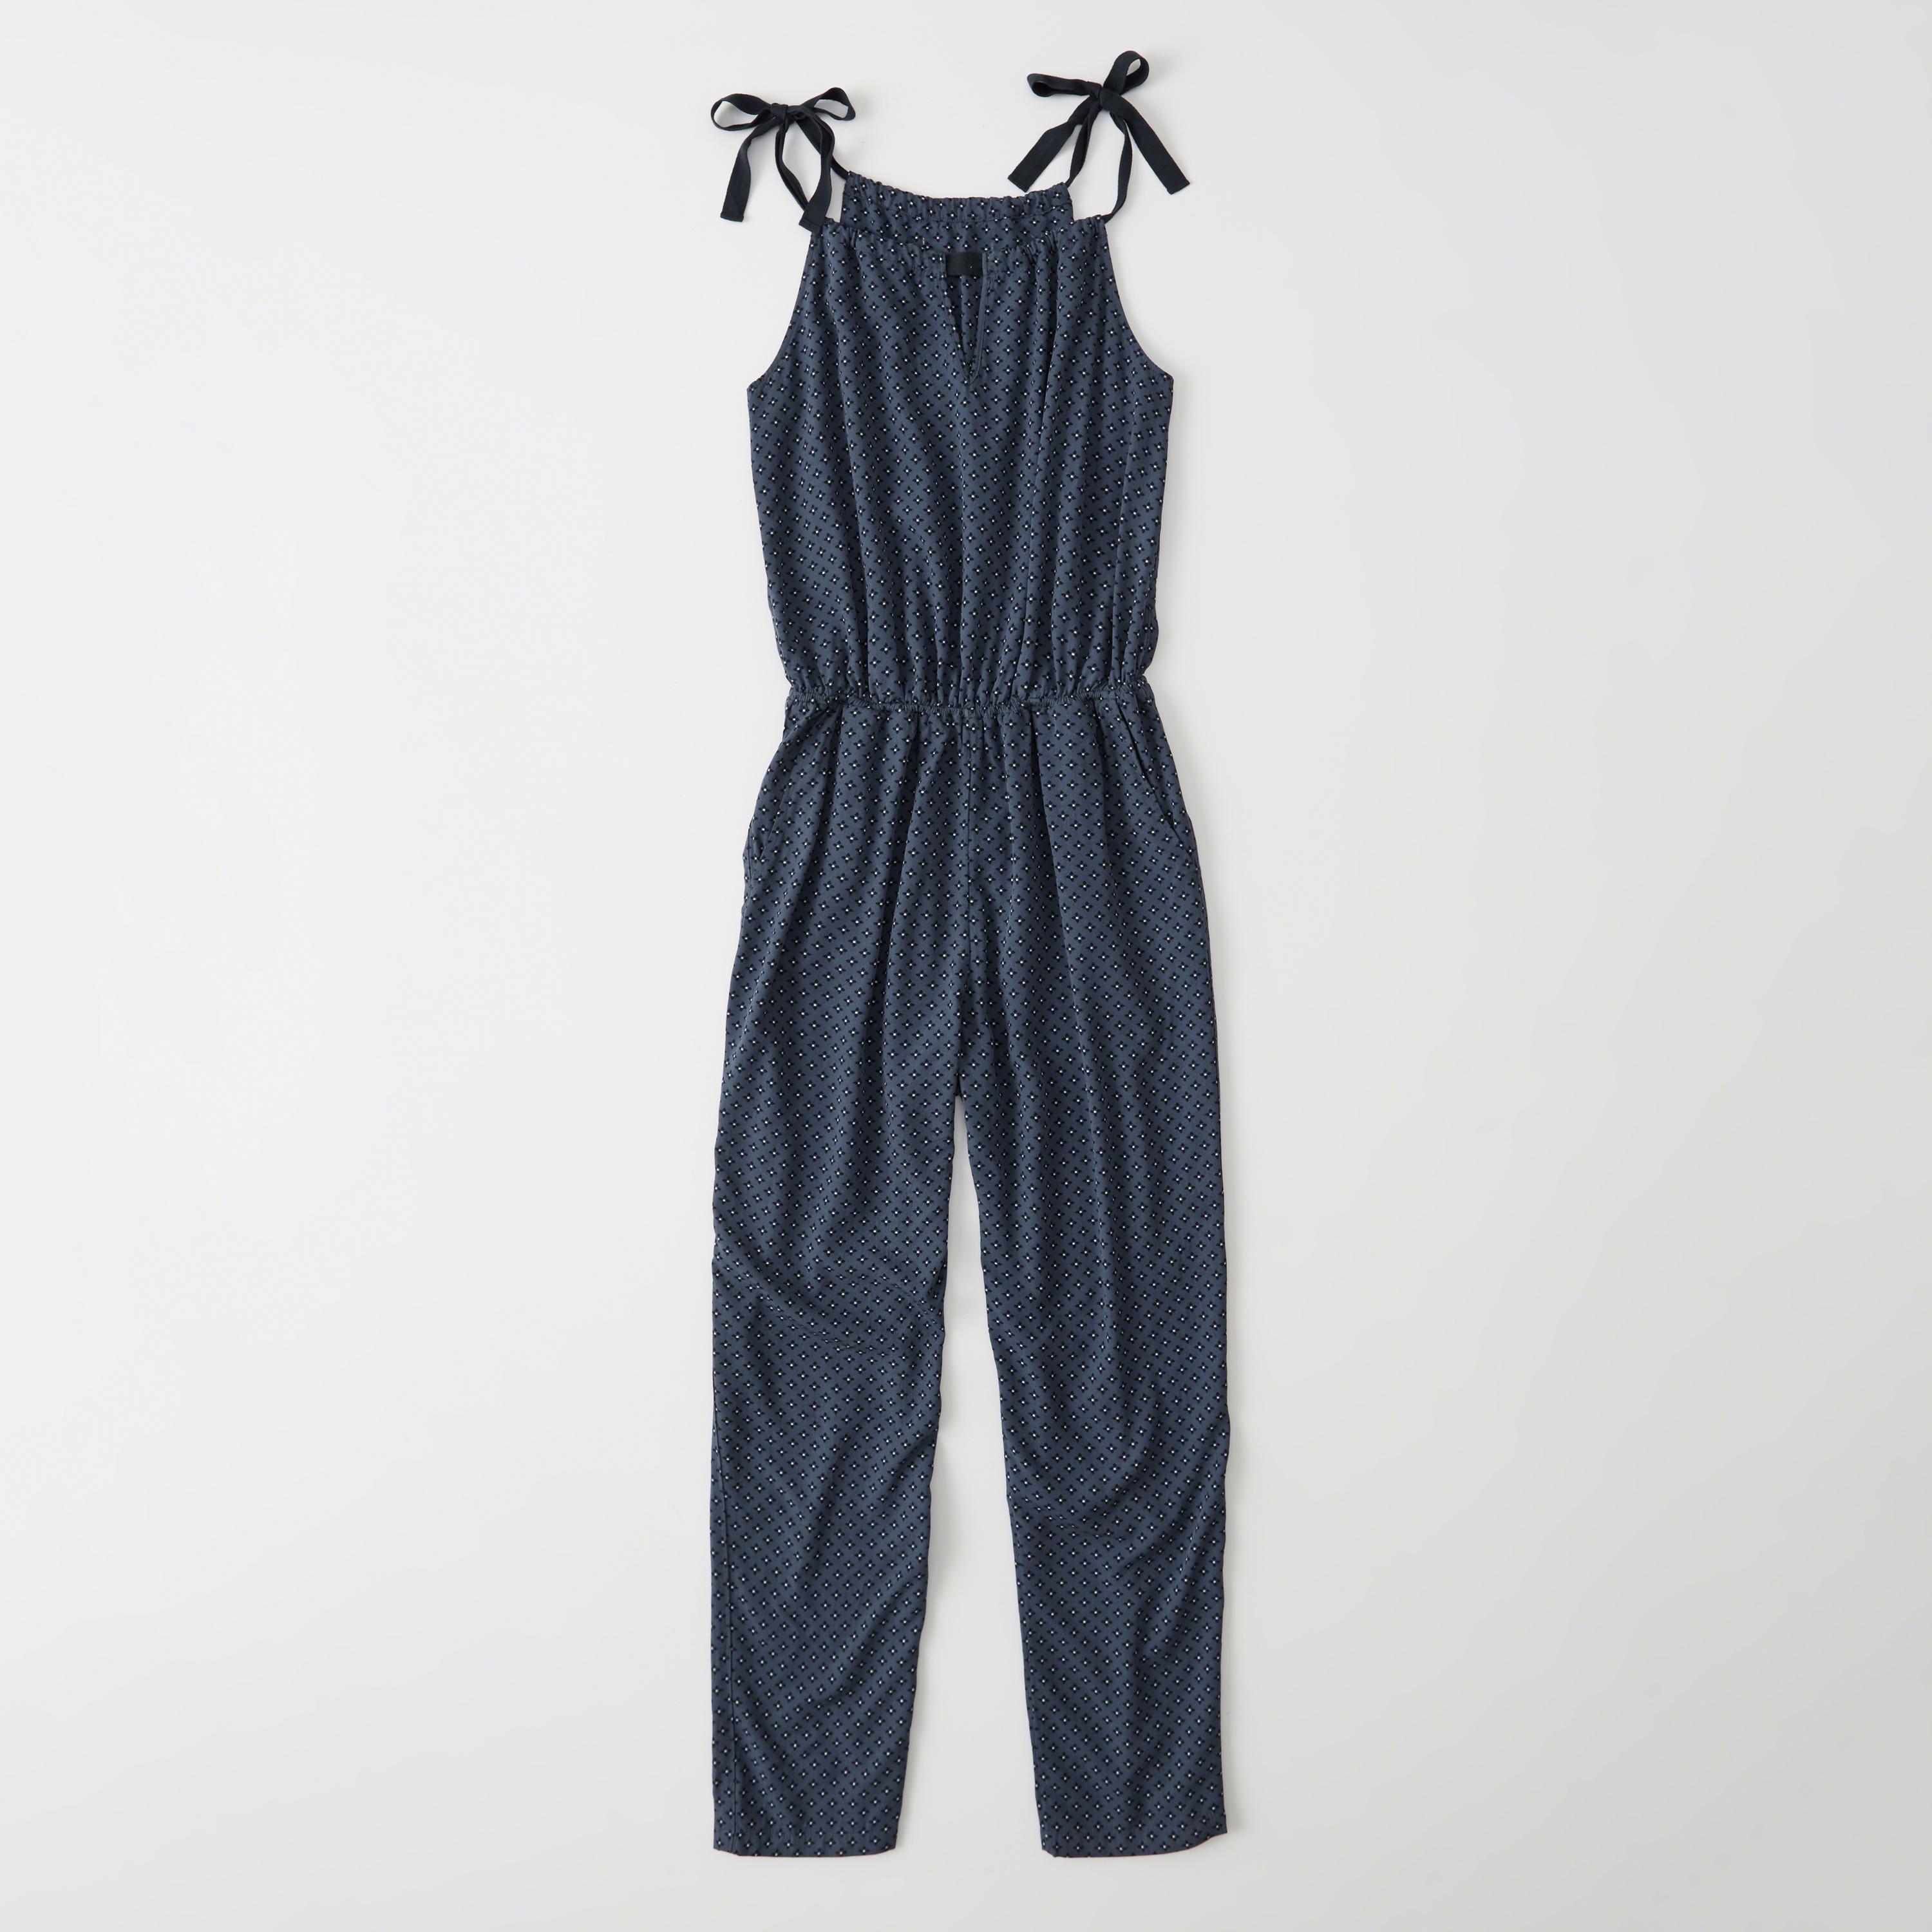 Lyst - Abercrombie & Fitch Tie-shoulder Jumpsuit in Blue